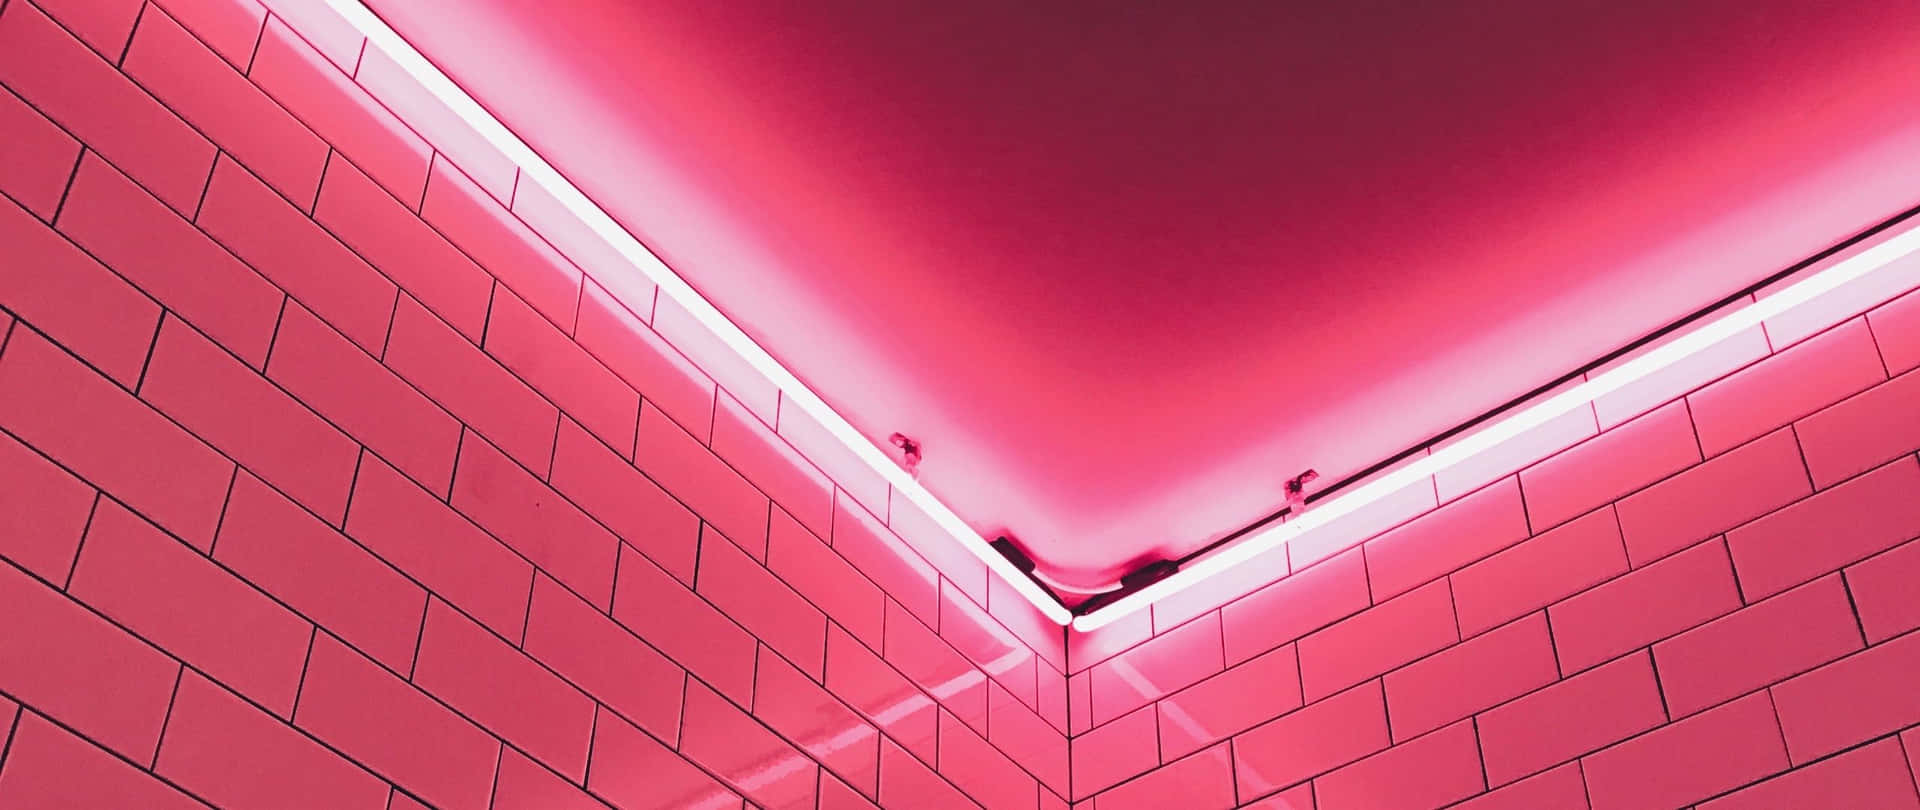 Red Aesthetic Laptop Bricks Wall Wallpaper